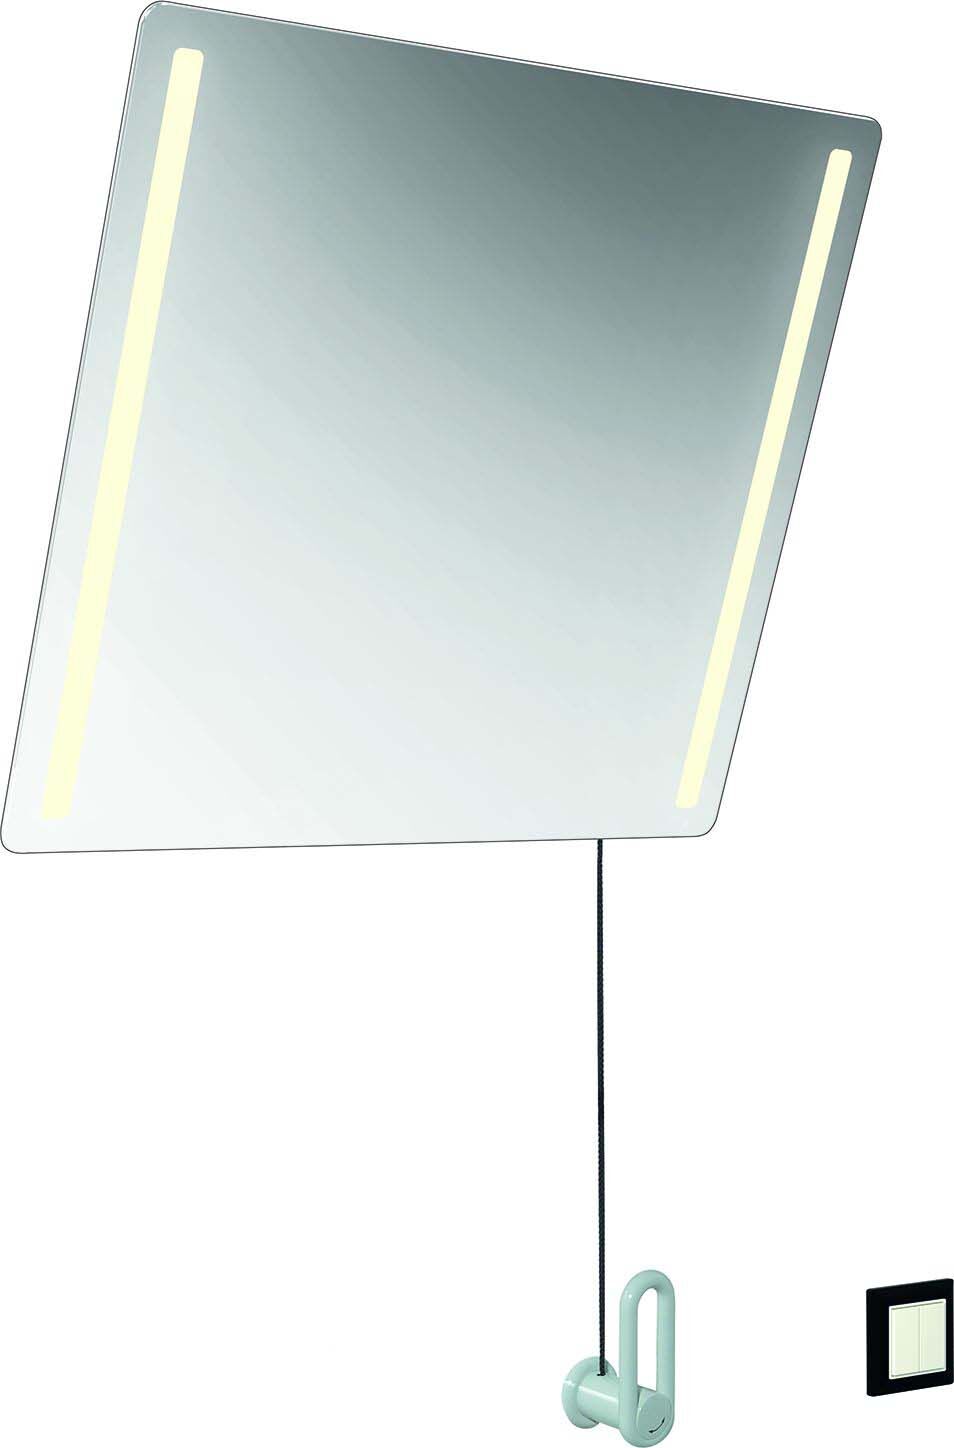 Hewi 801 Kipp-Lichtspiegel LED 801.01.40155 600x540x6mm, aquablau